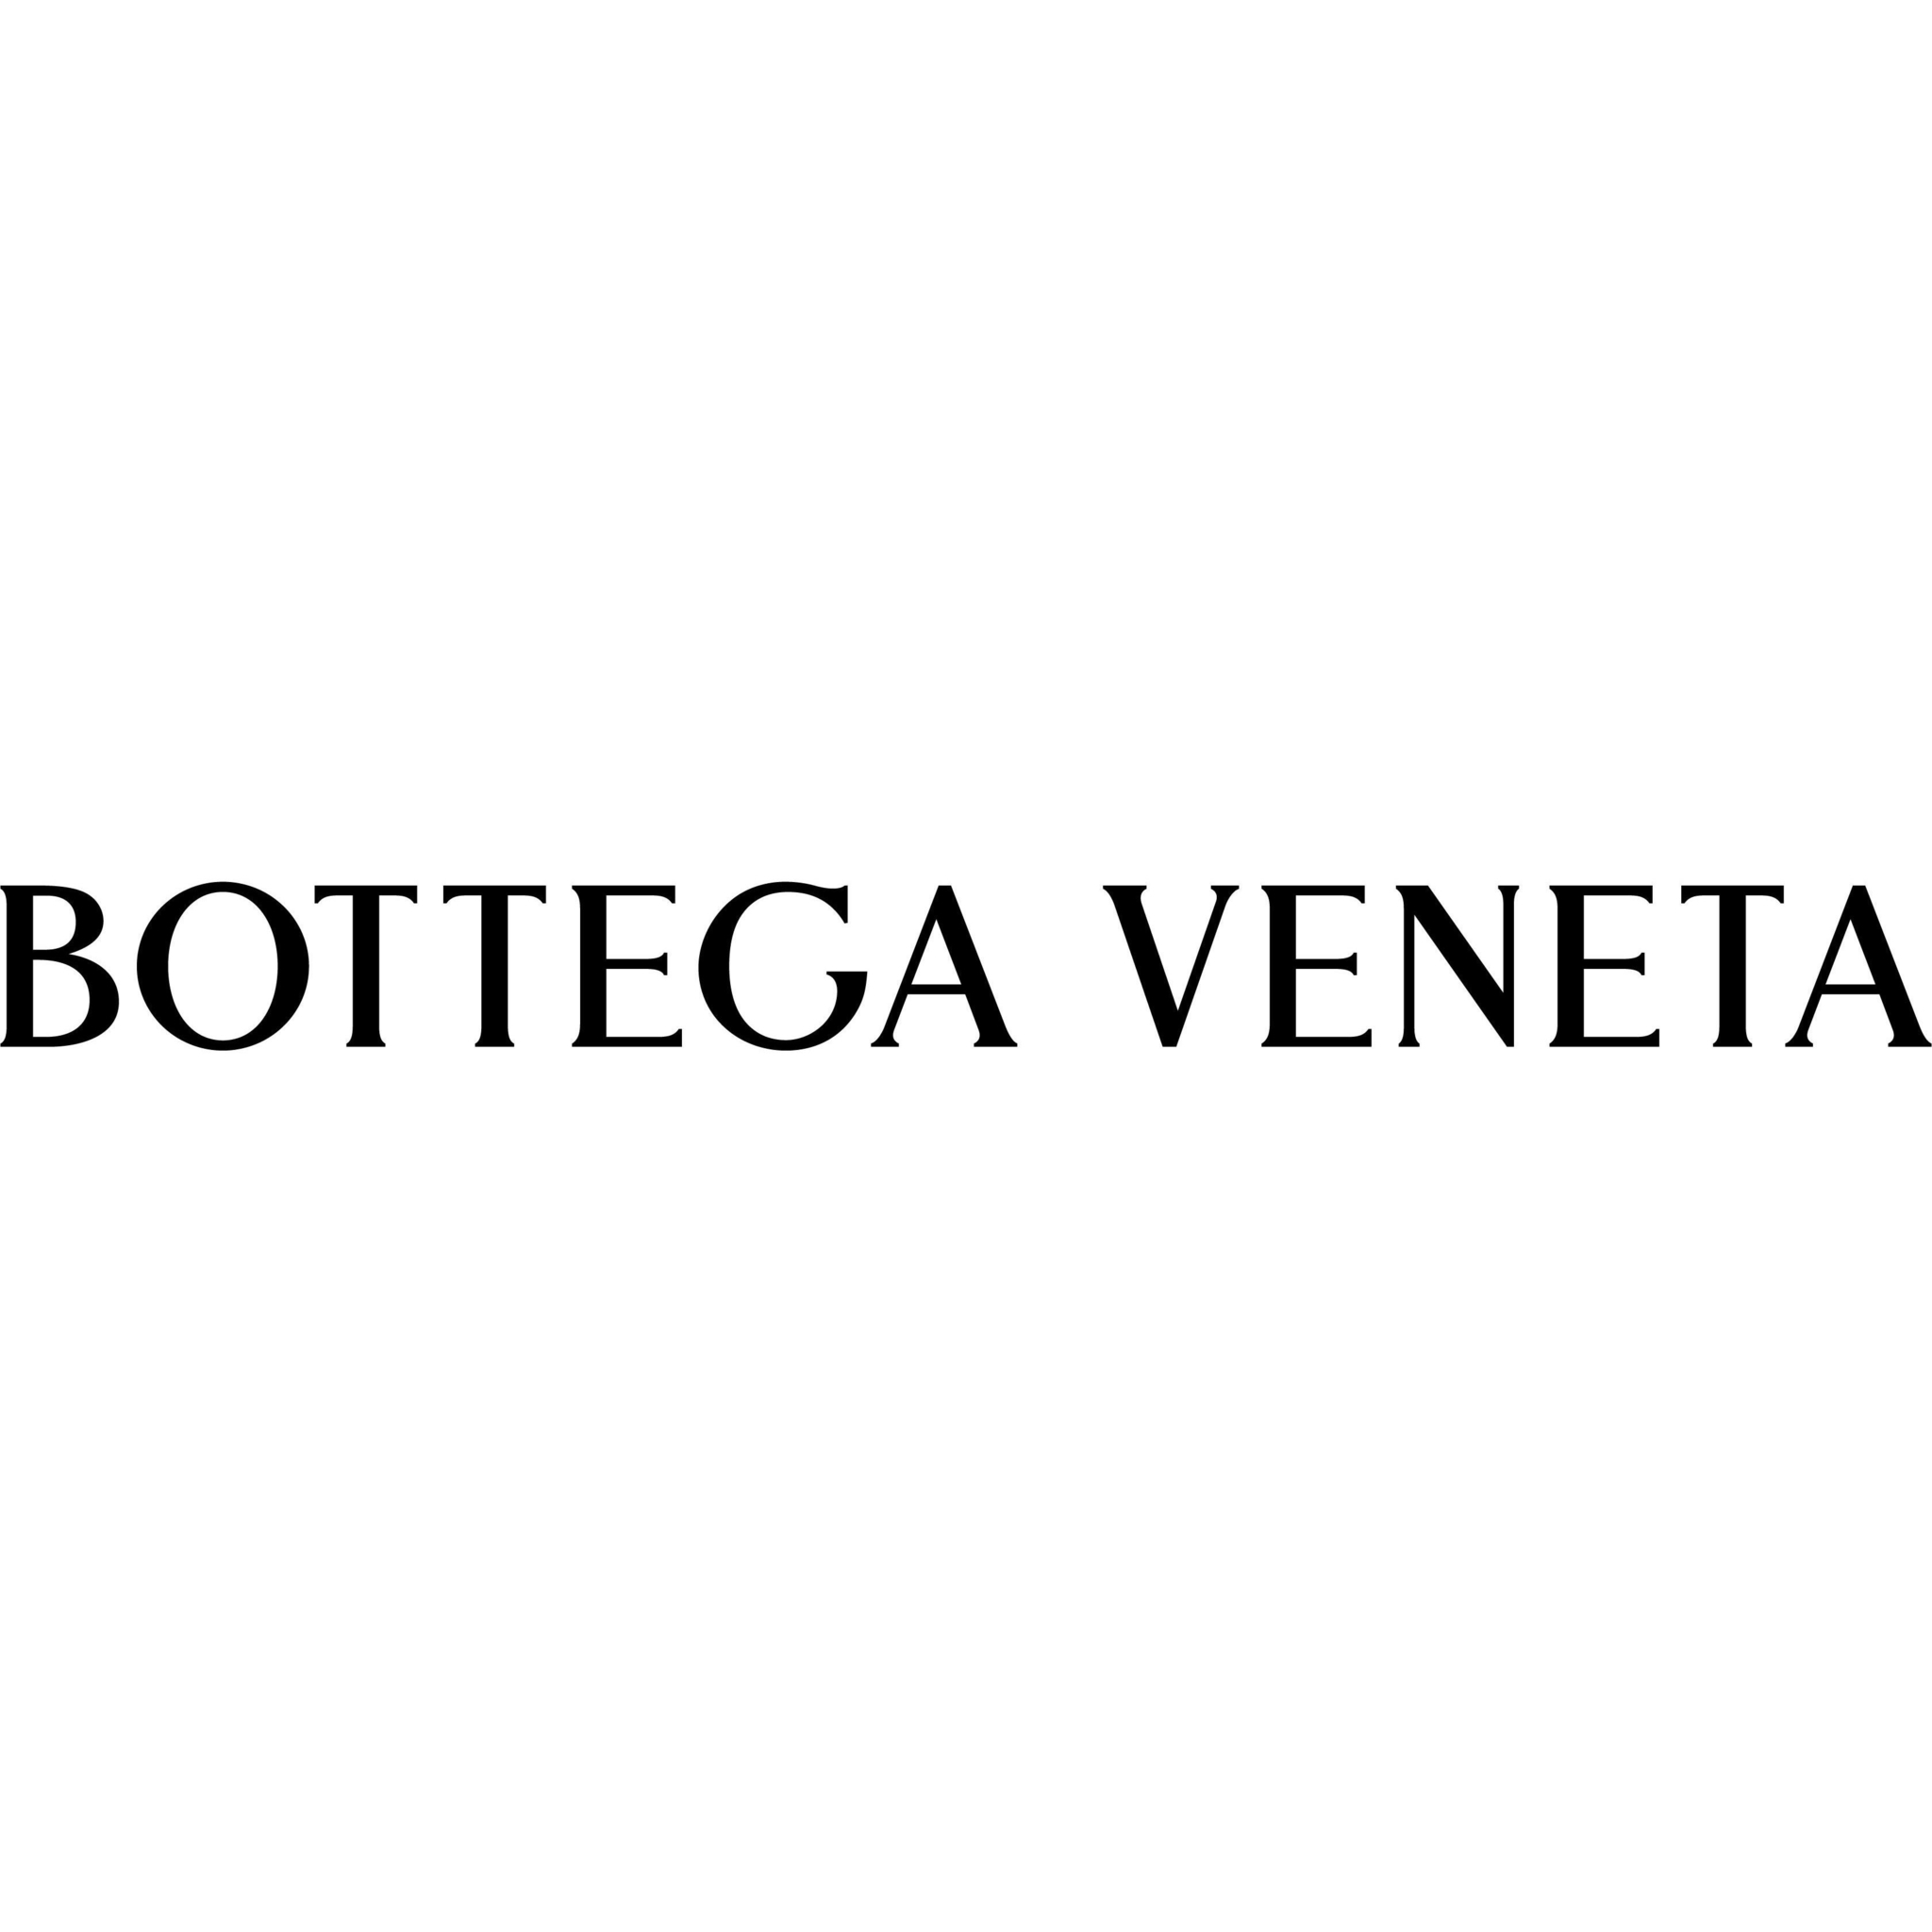 Bottega Veneta Toronto Bloor Holt Renfrew - Leather Goods Retailers